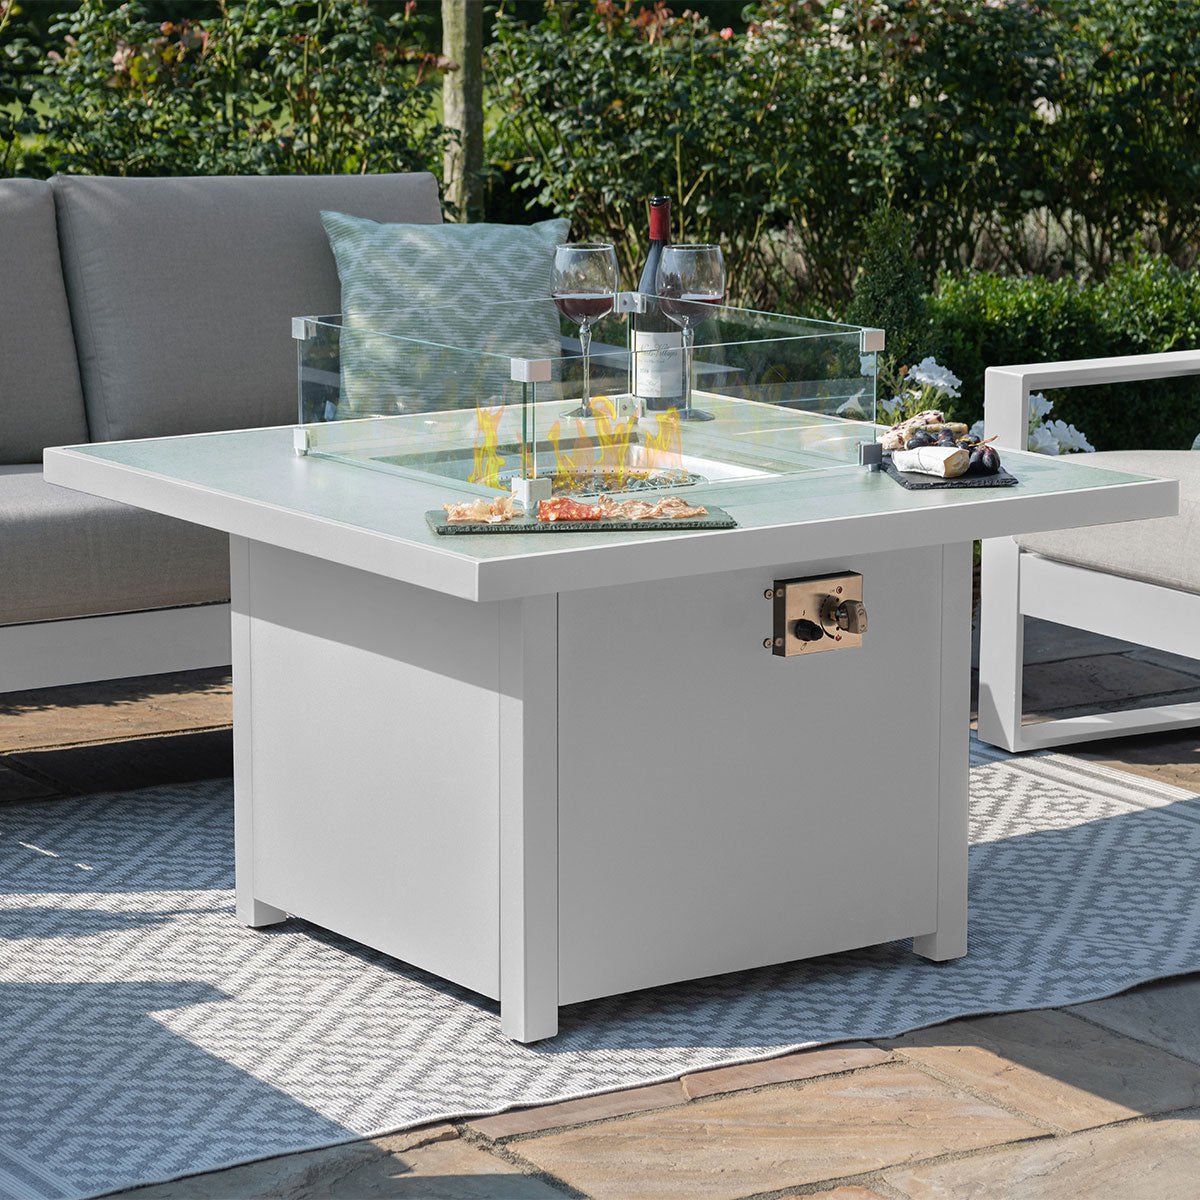 Maze - Amalfi 3 Seat Aluminium Sofa Set with Fire Pit Table - White